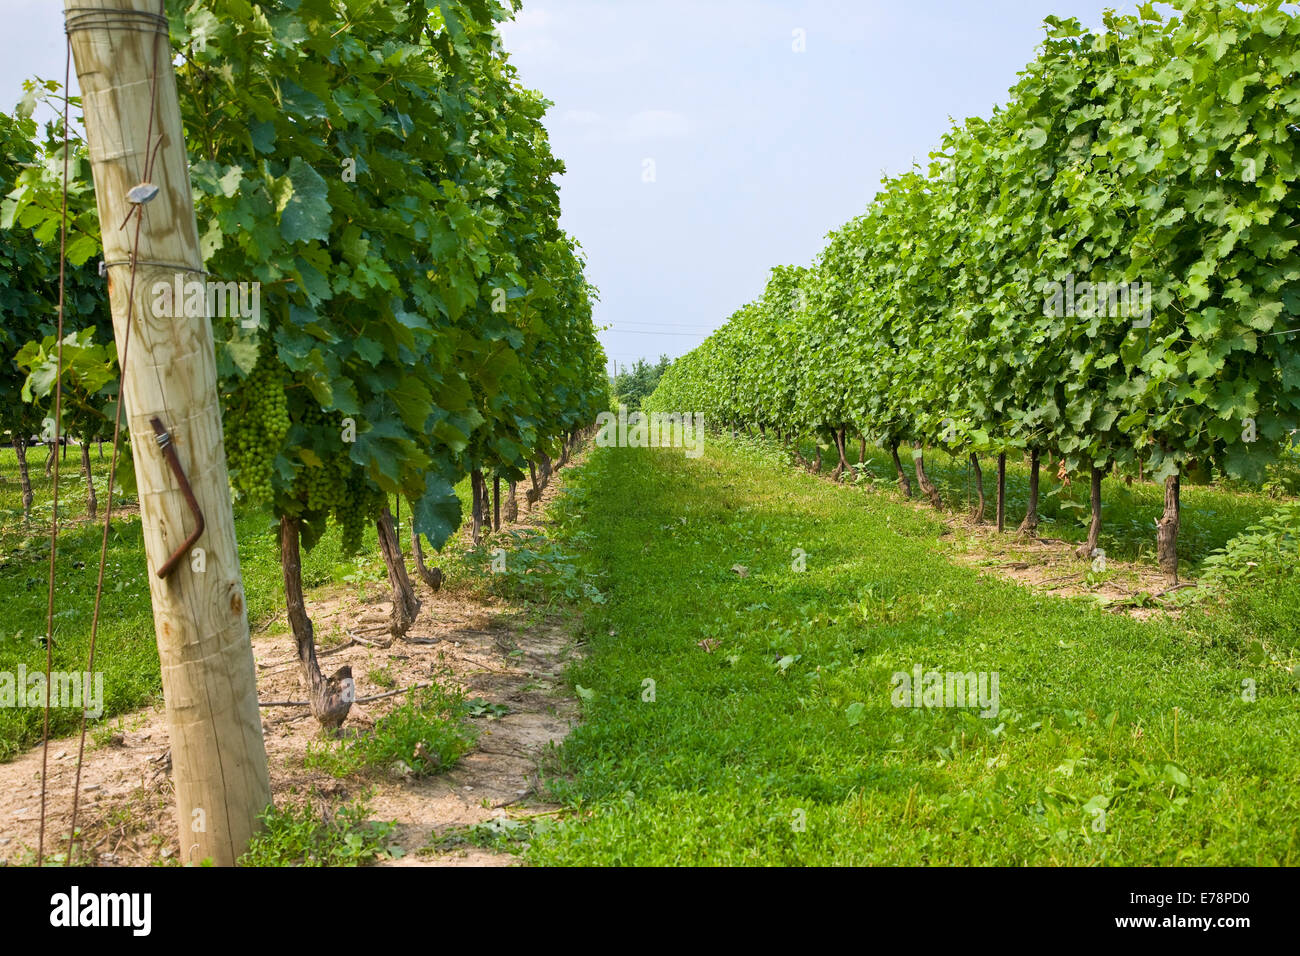 Vineyard in the Niagara region, Canada Stock Photo